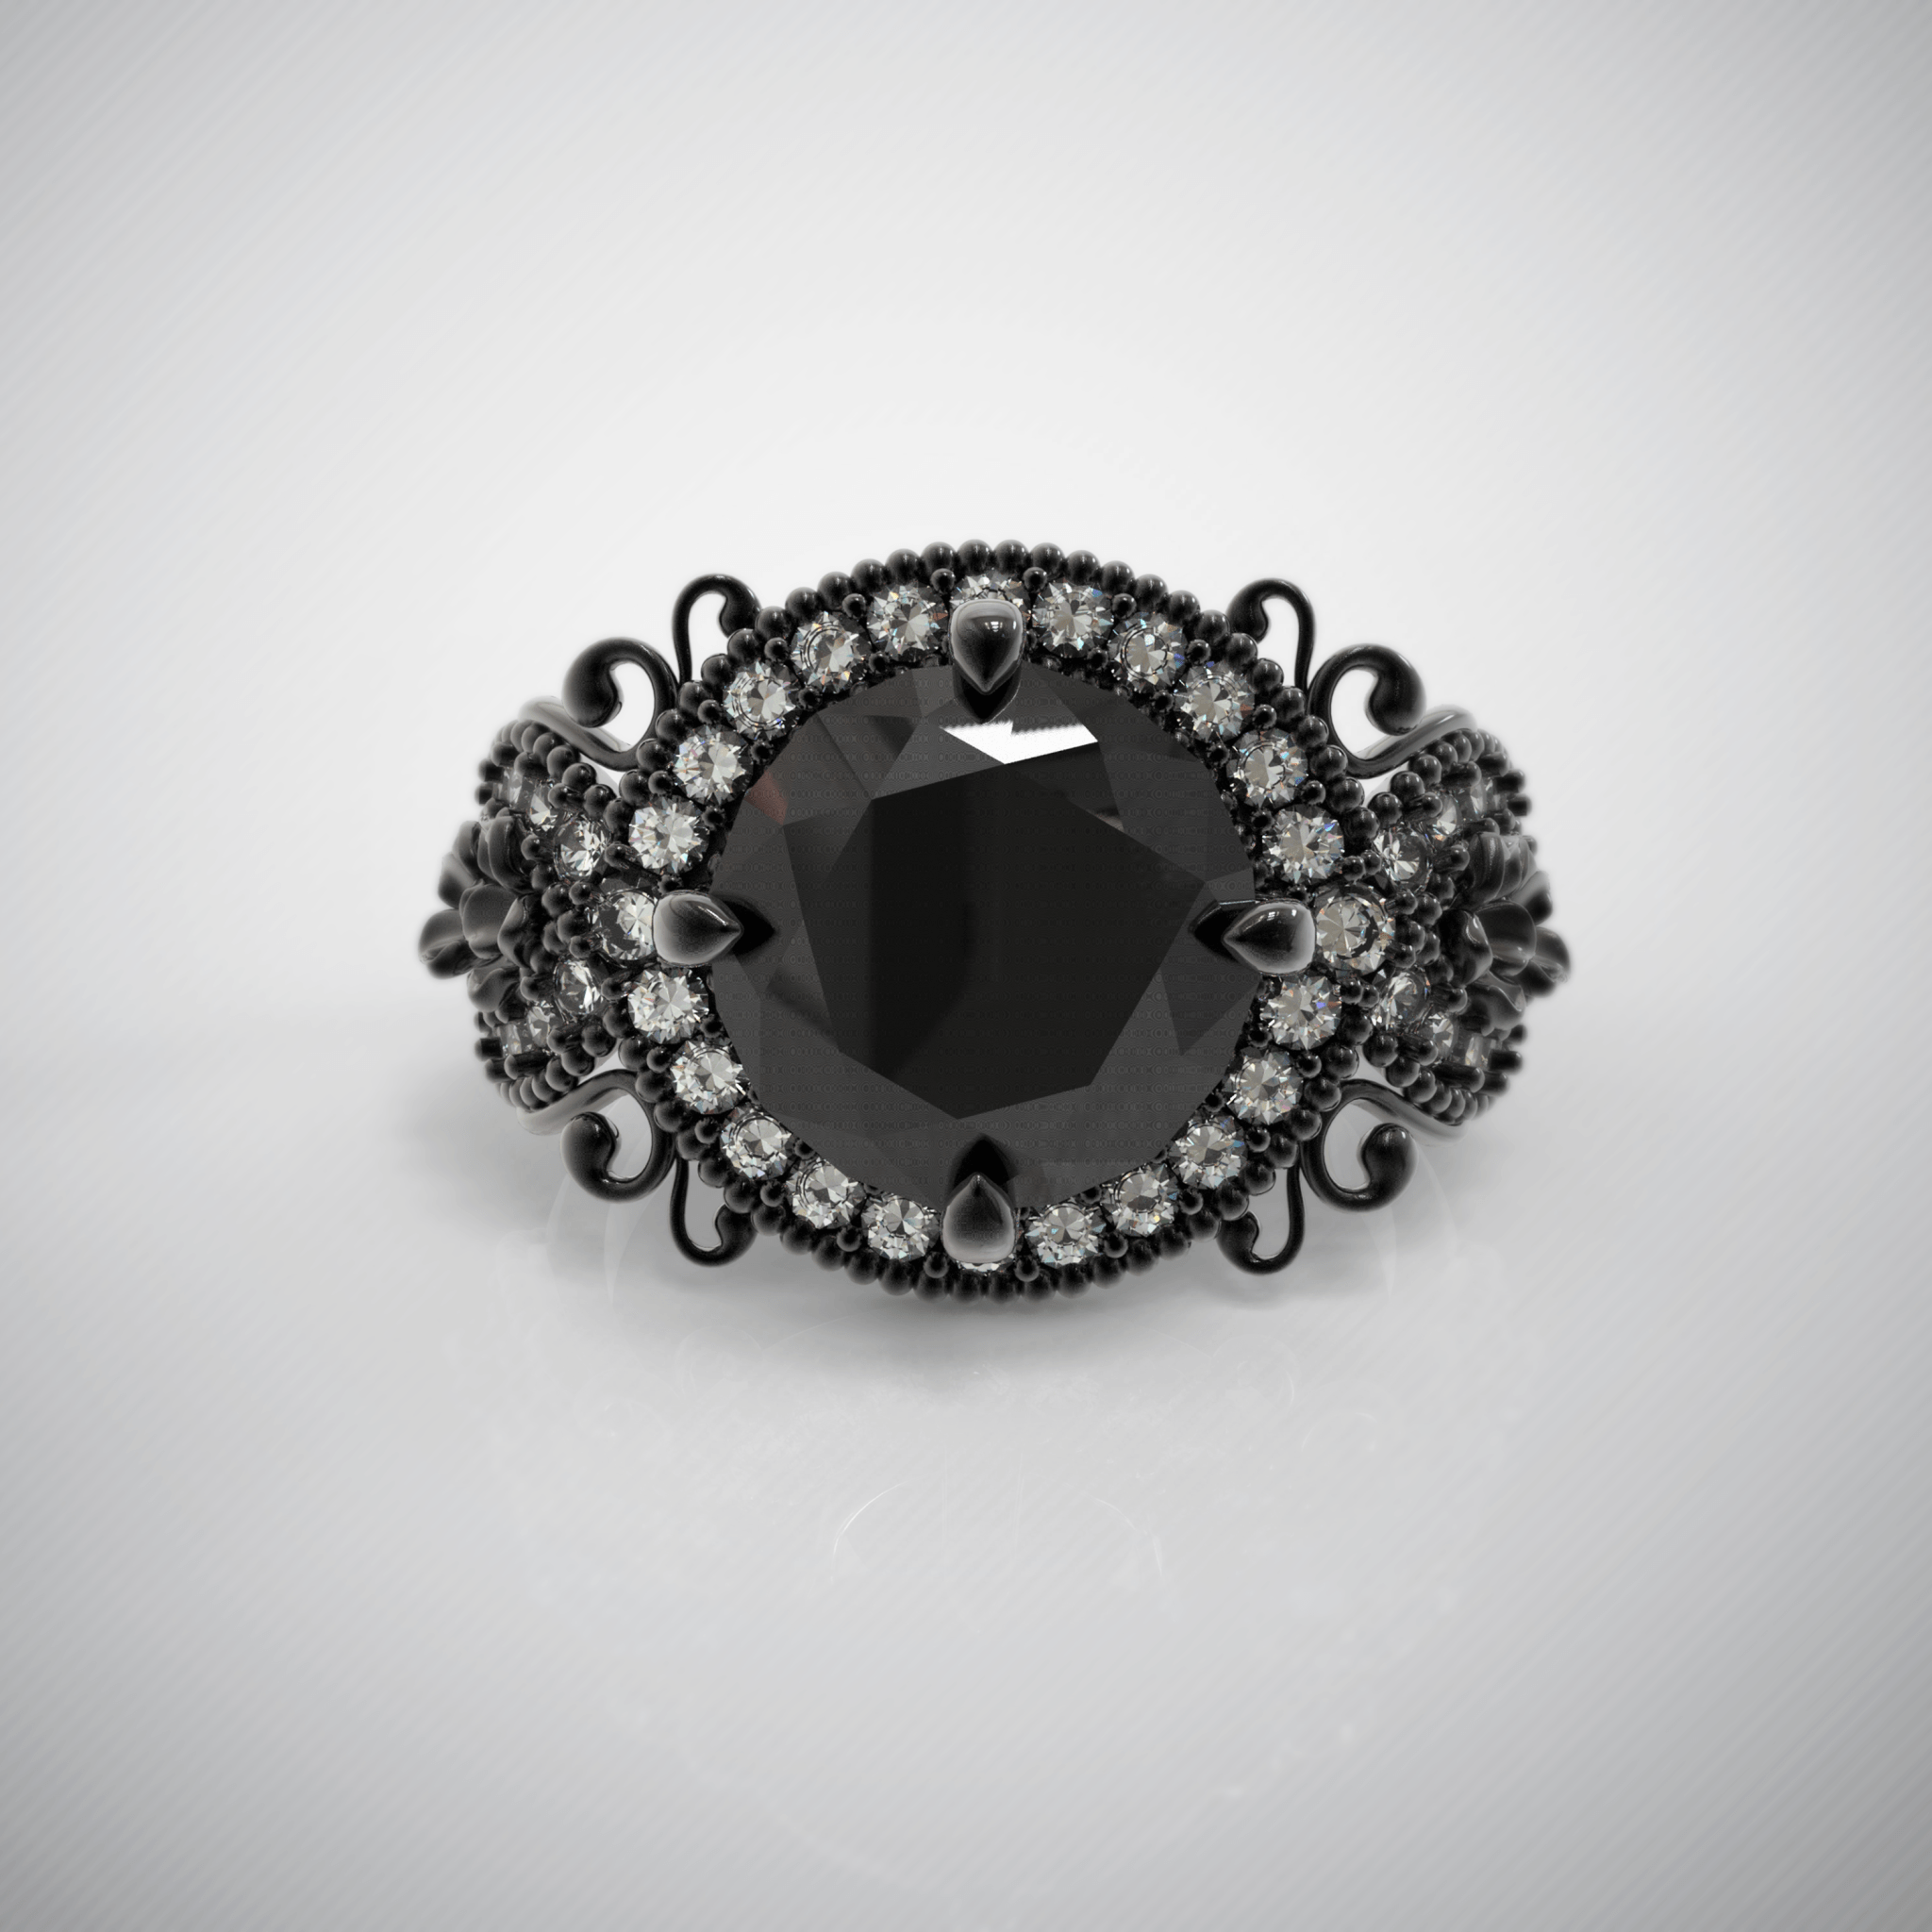 Unique Majestic Nature Engagement Ring No.42 in Black Gold - Black Spinel/Topaz - Roelavi